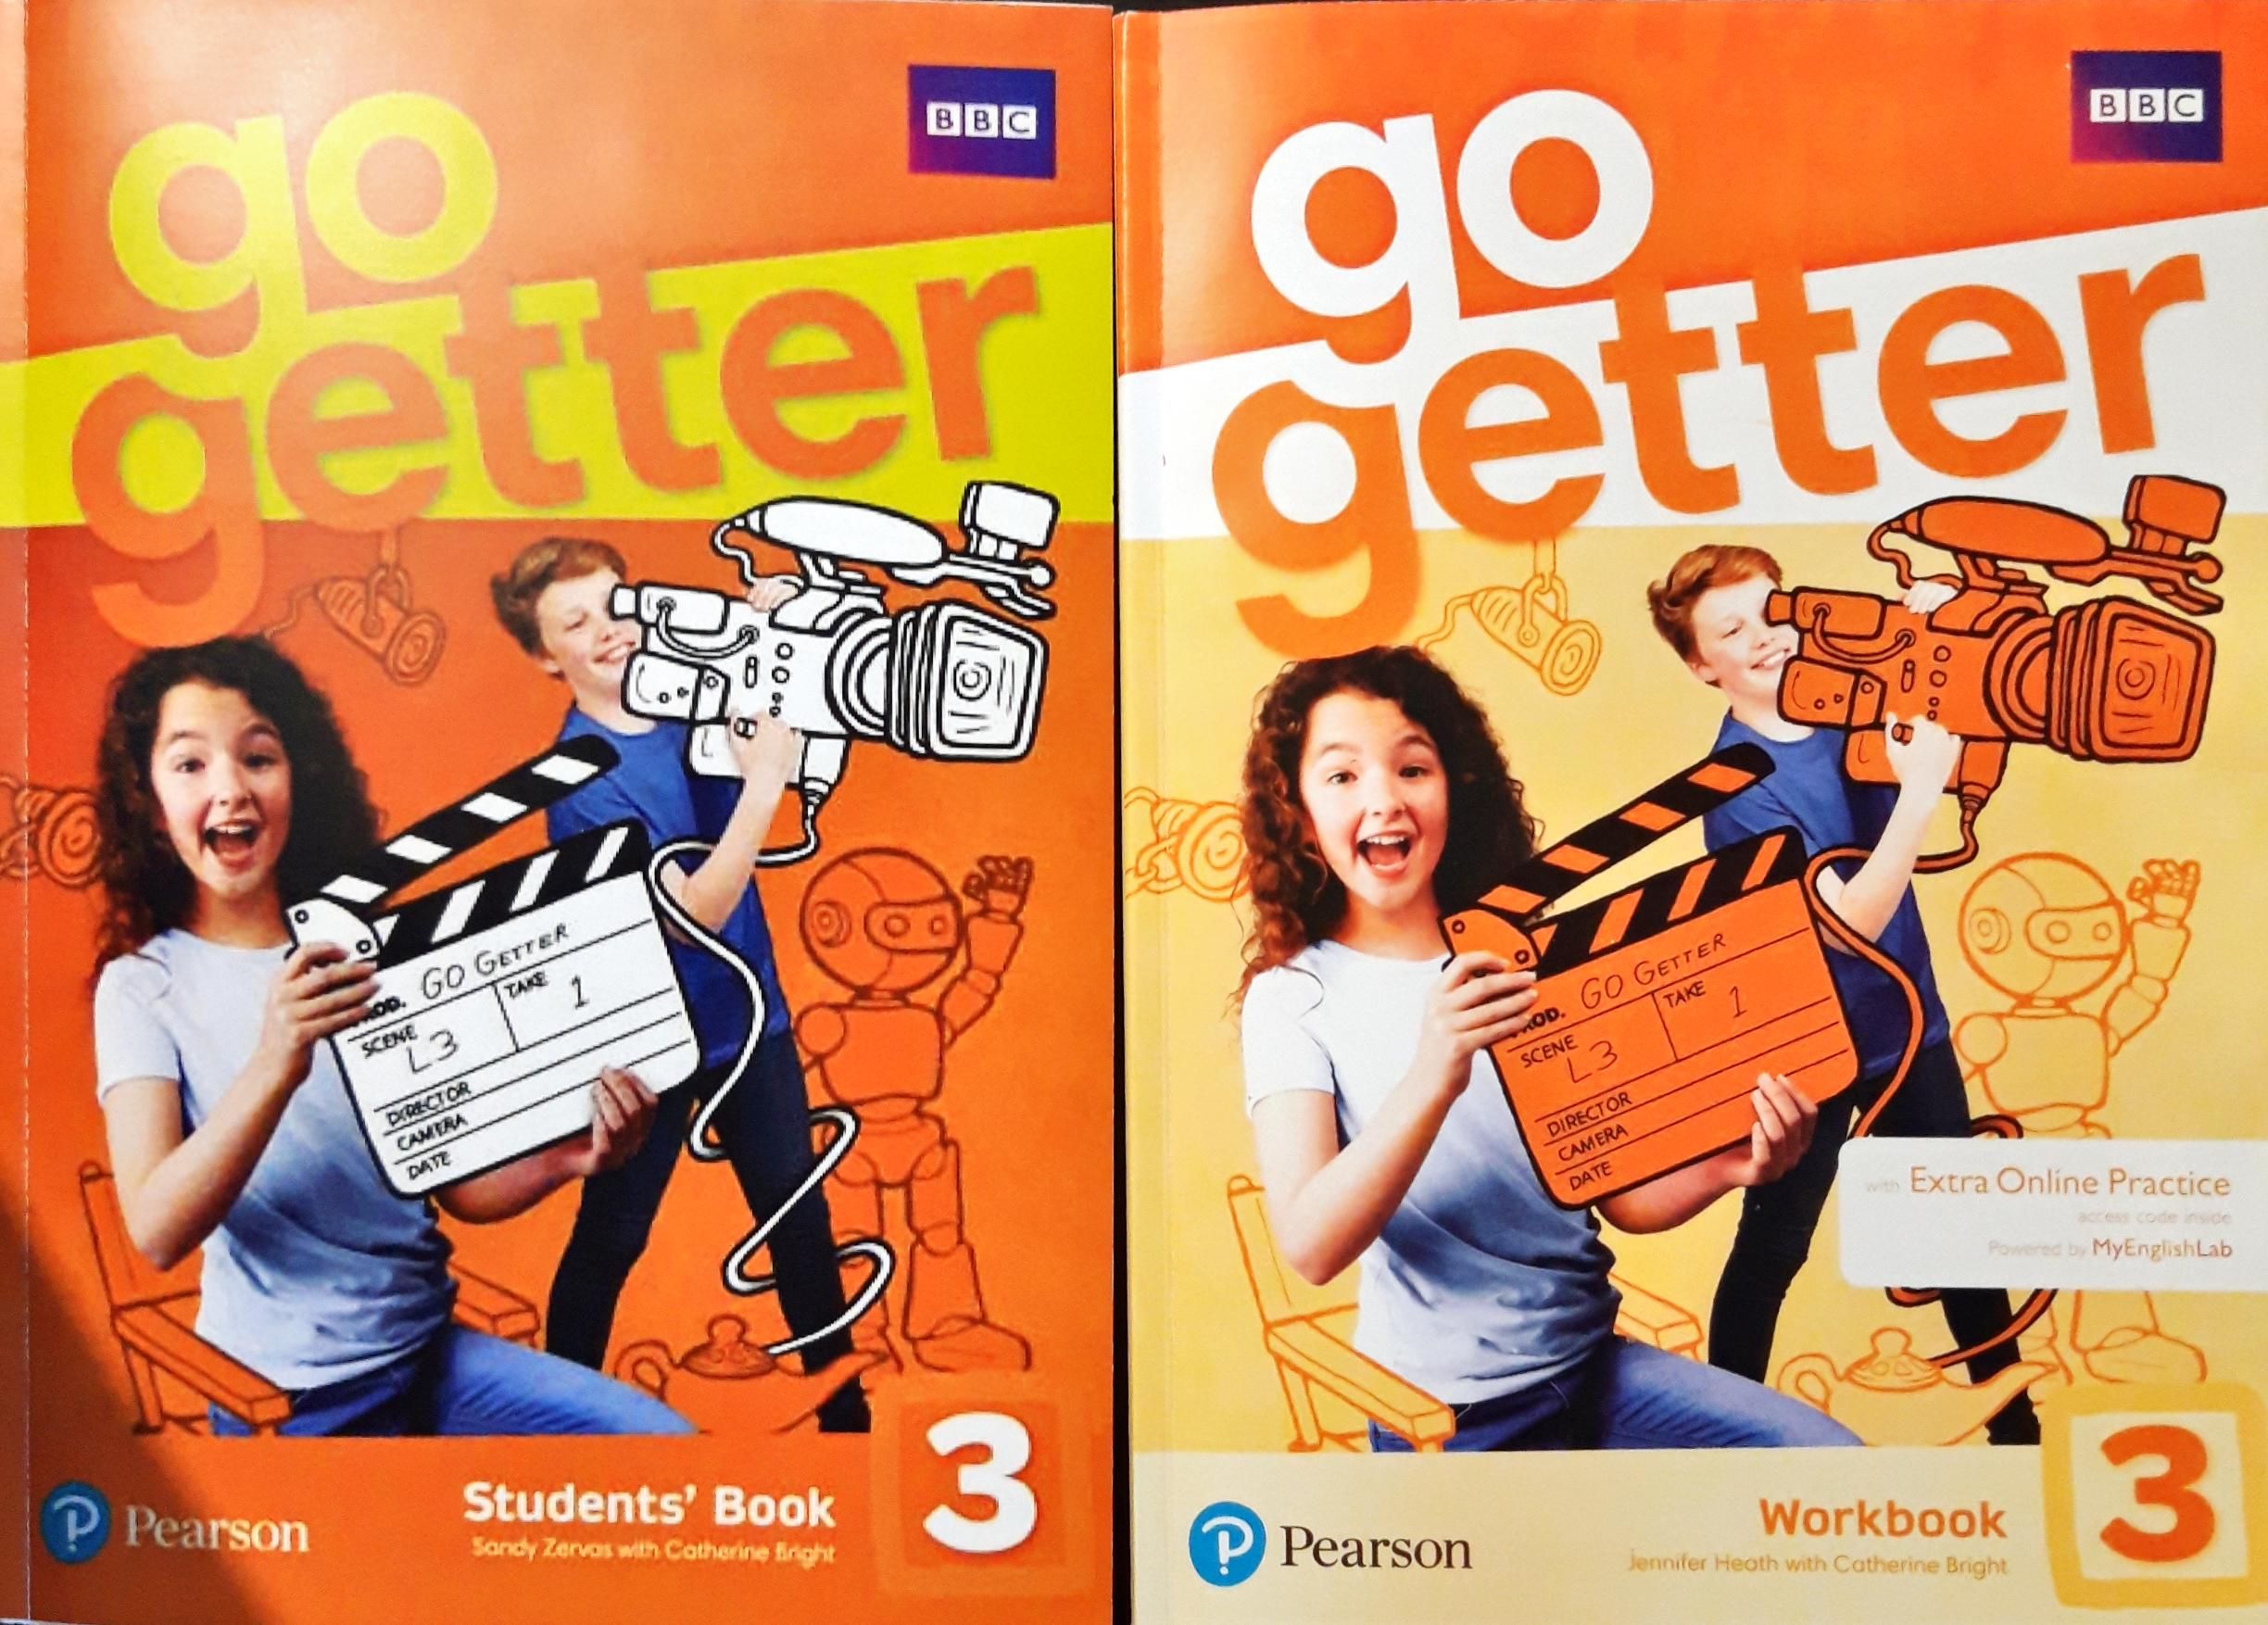 Go getter 3 страница 3. Рабочая тетрадь go Getter 1 Pearson. Учебник go Getter 3. Учебник go Getter 1. Pearson go Getter 3 Workbook.